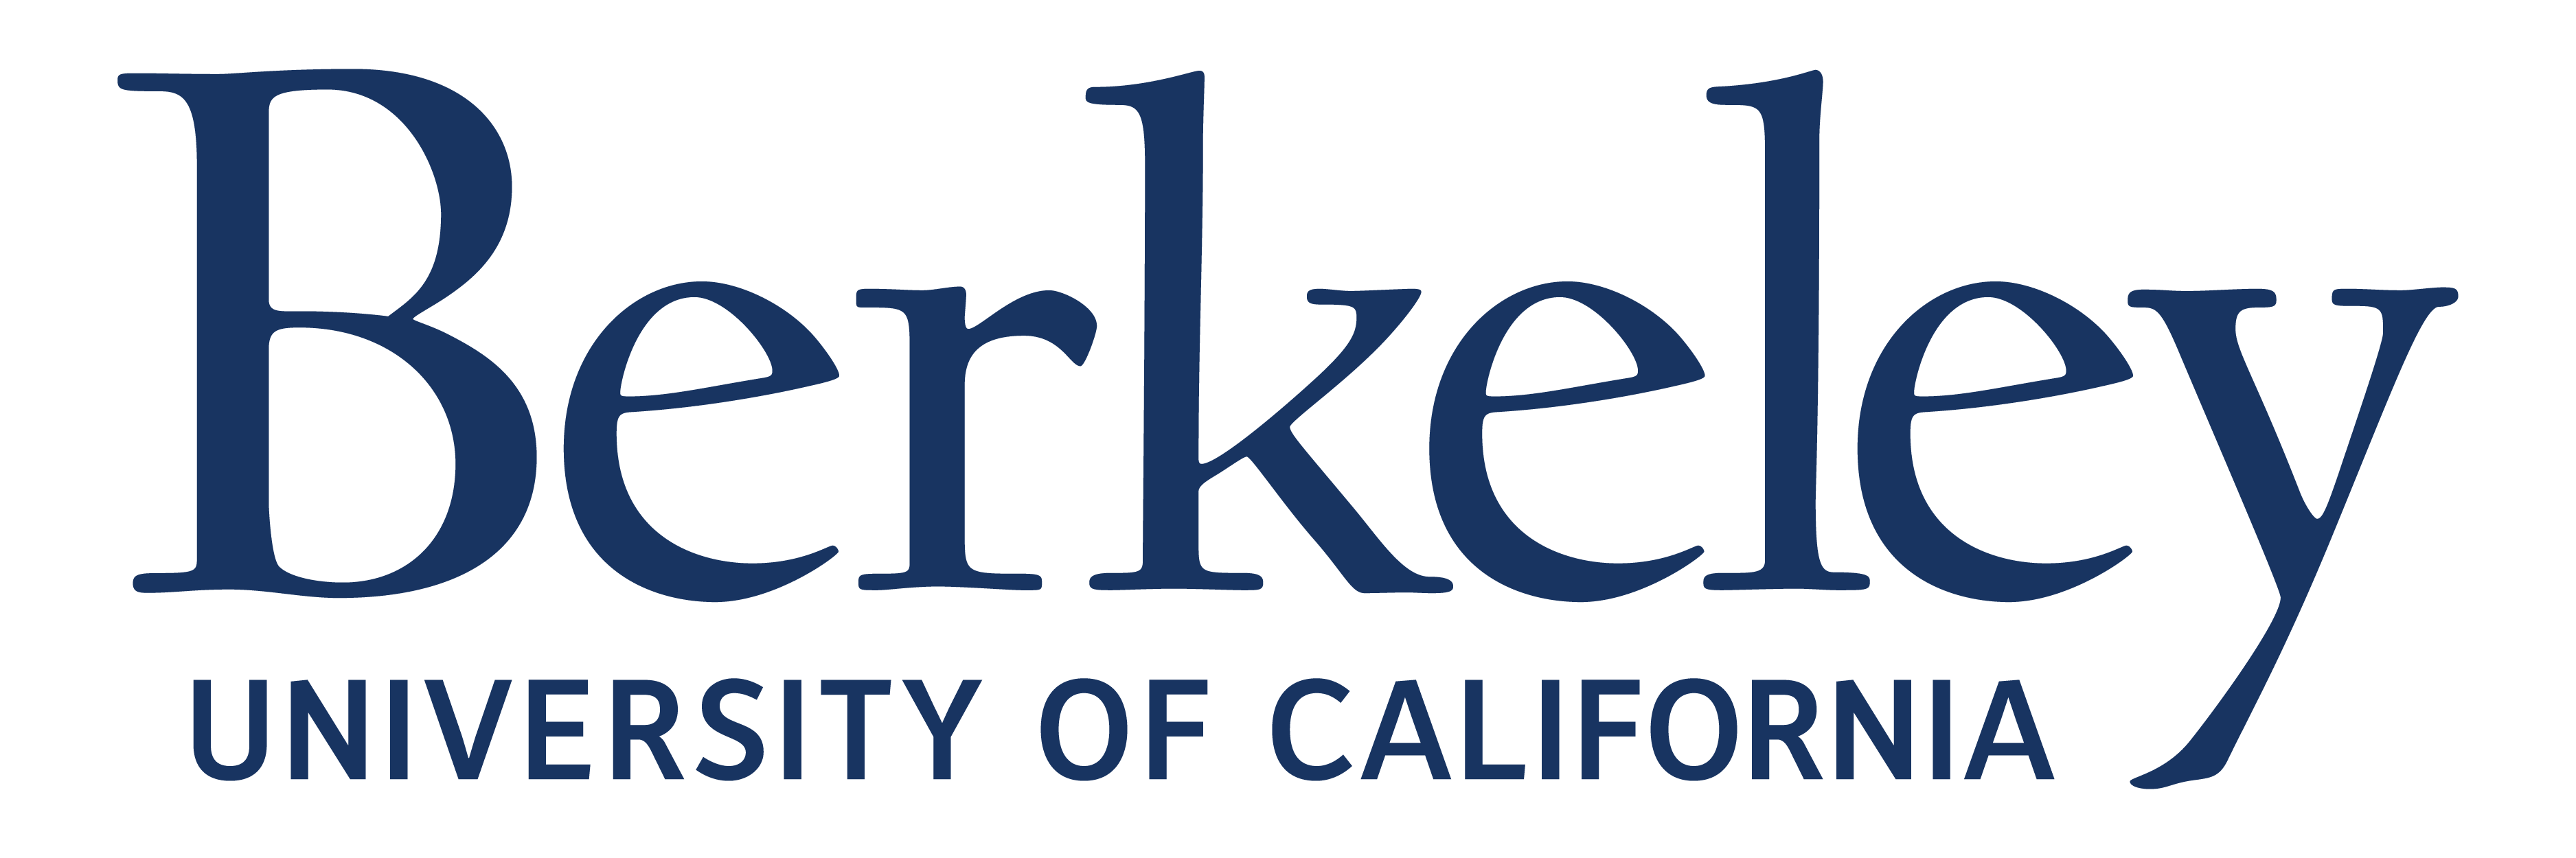 Berkeley_wordmark_blue